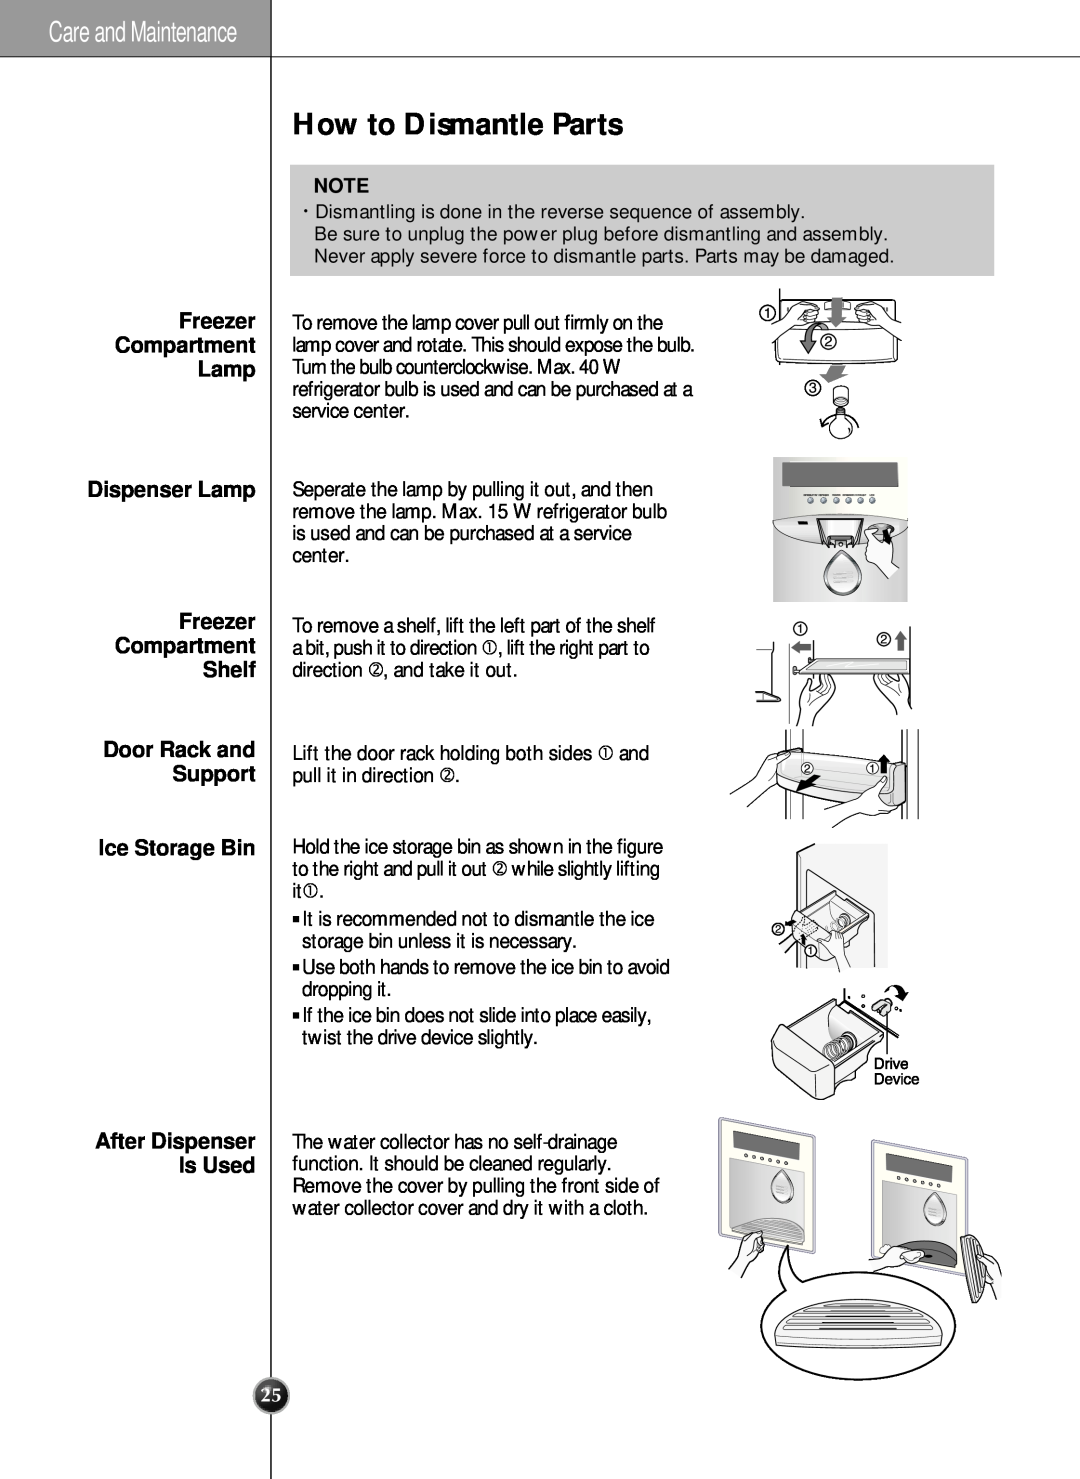 LG Electronics LRSC 26980TT manual How to Dismantle Parts, Care and Maintenance, Freezer Compartment Lamp Dispenser Lamp 